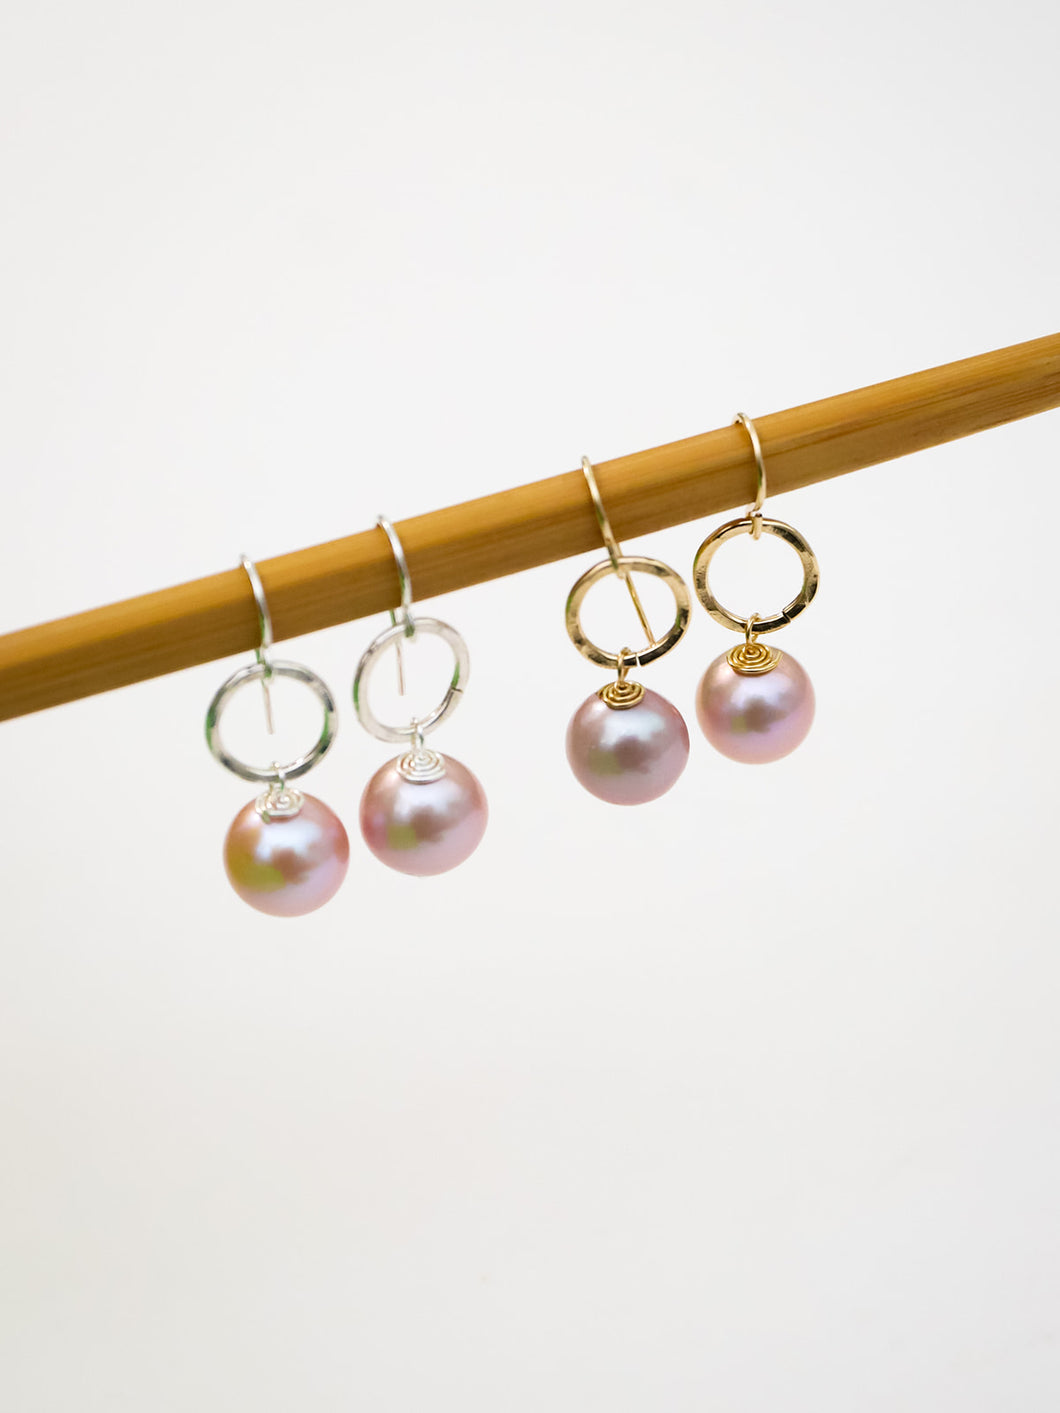 Spirit Circle dangle earrings with Edison pearls